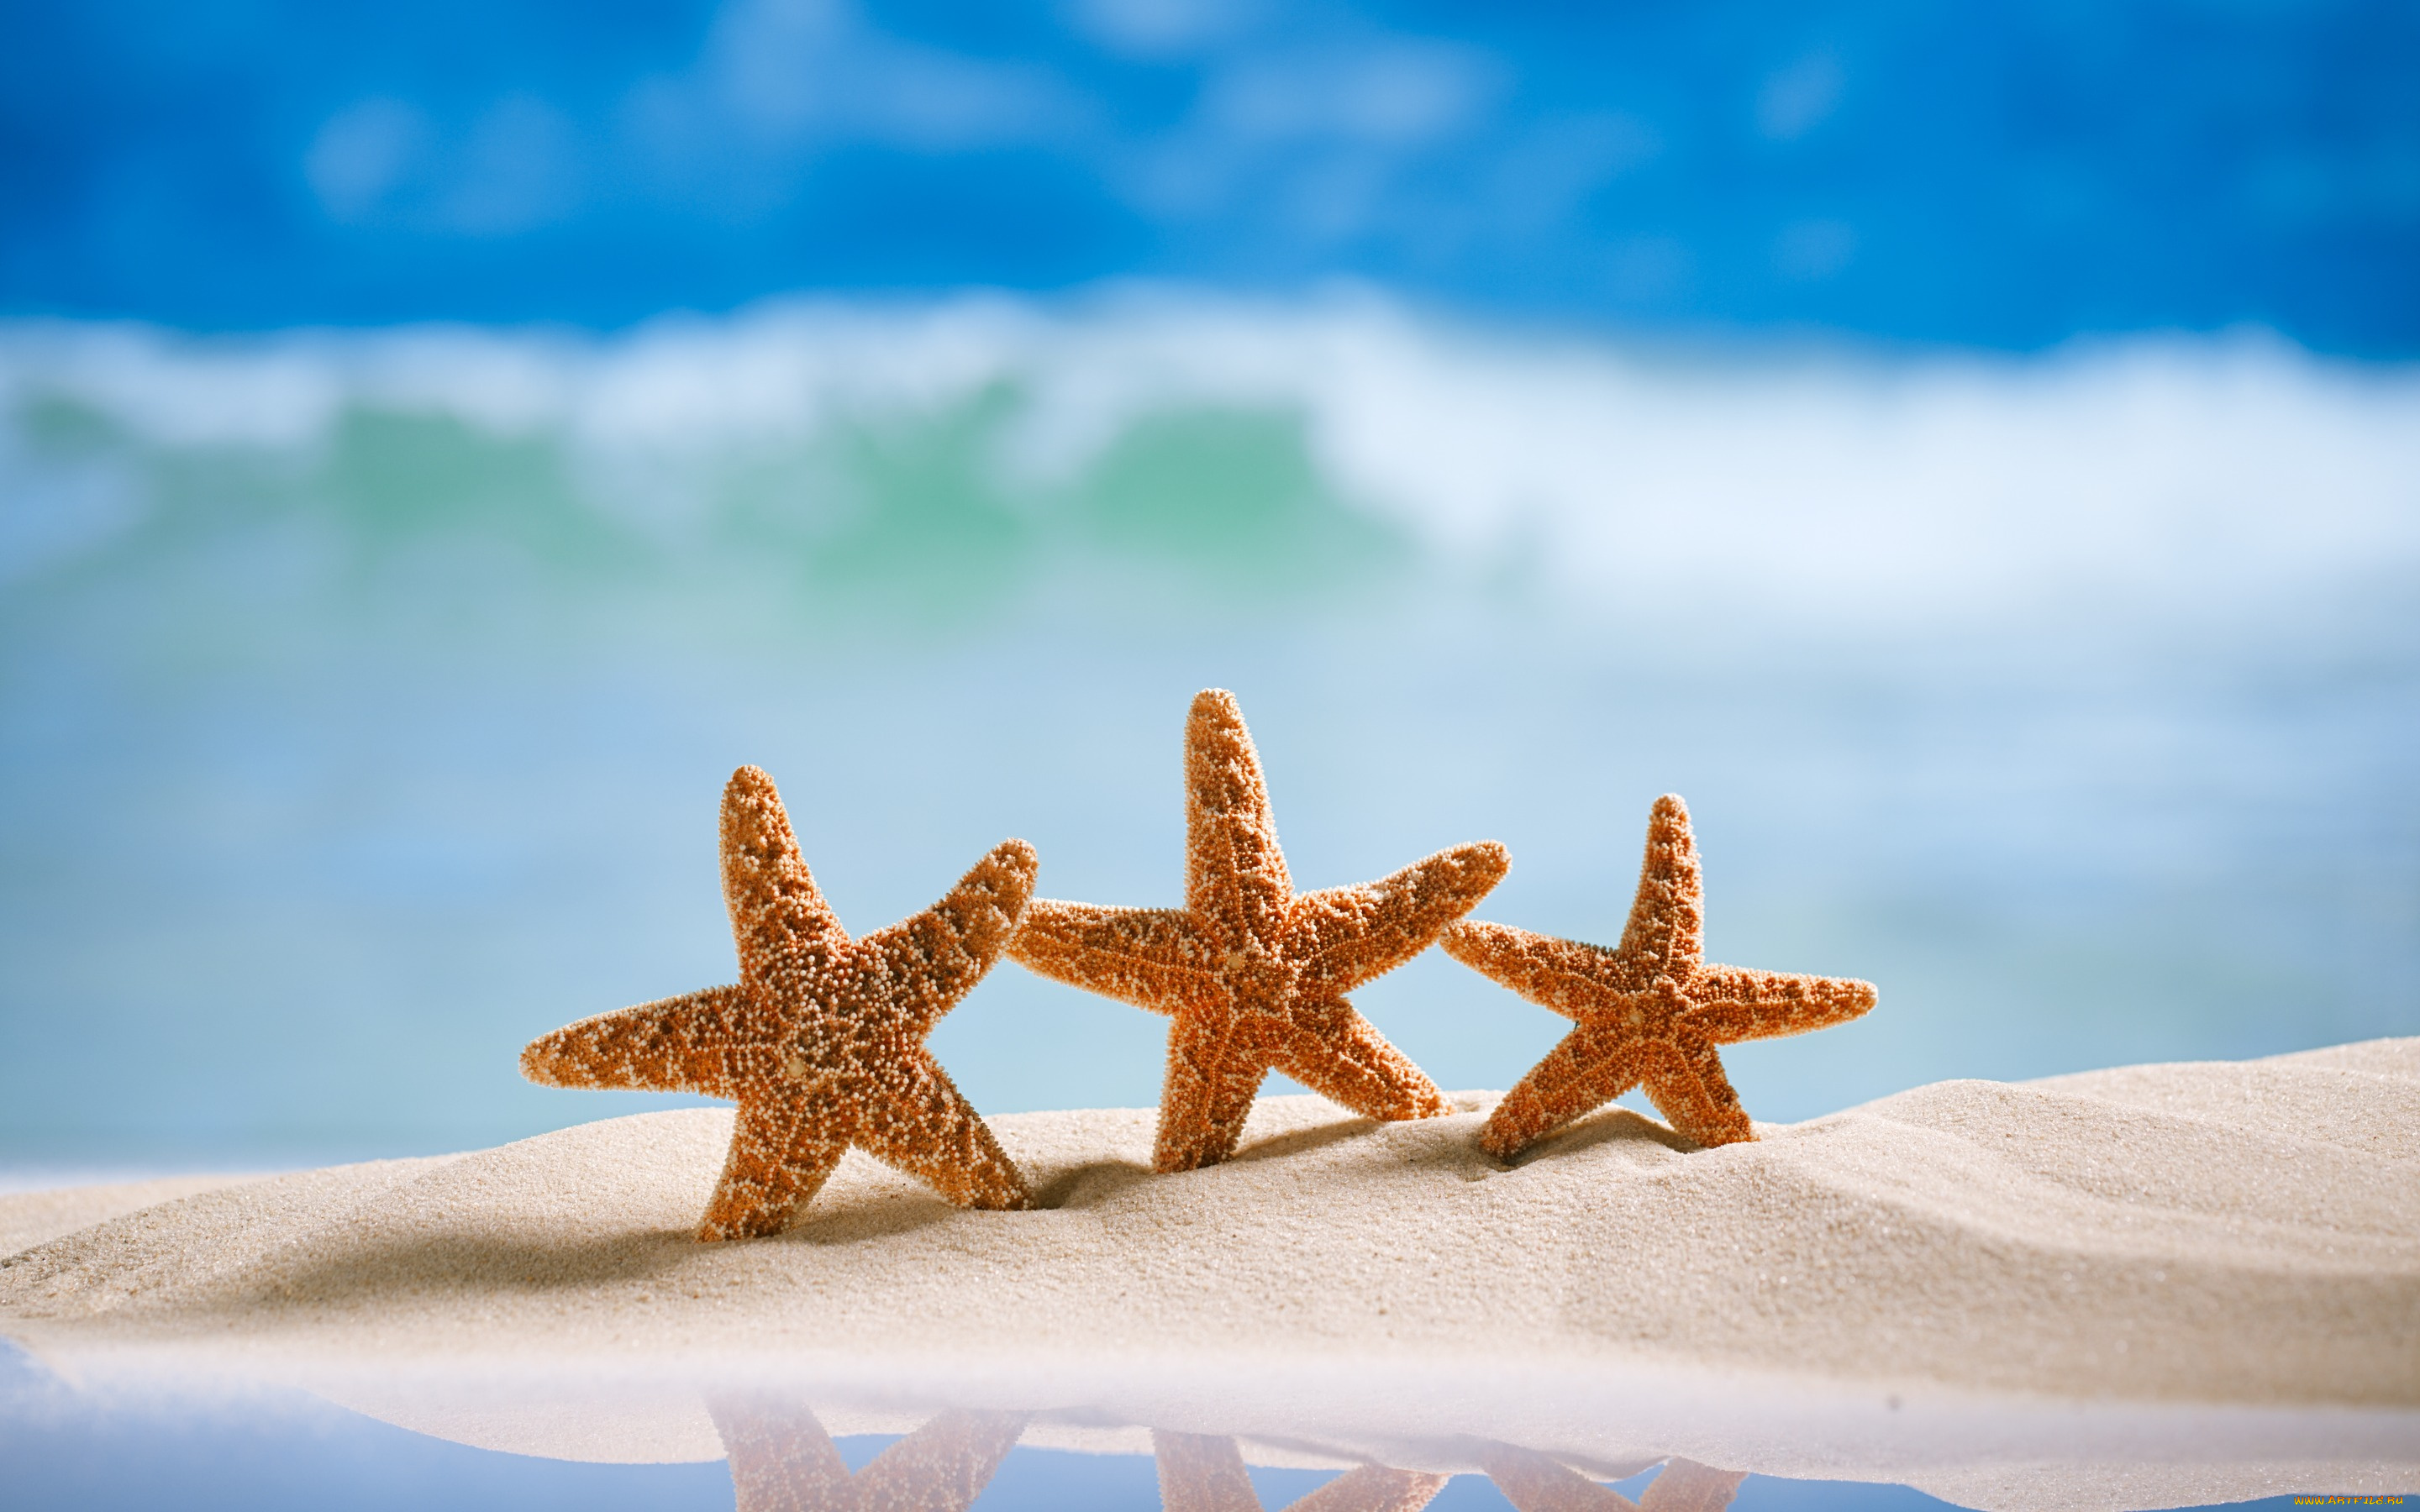 разное, ракушки, , кораллы, , декоративные, и, spa-камни, пляж, summer, песок, морская, звезда, sand, starfishes, море, vacation, sea, beach